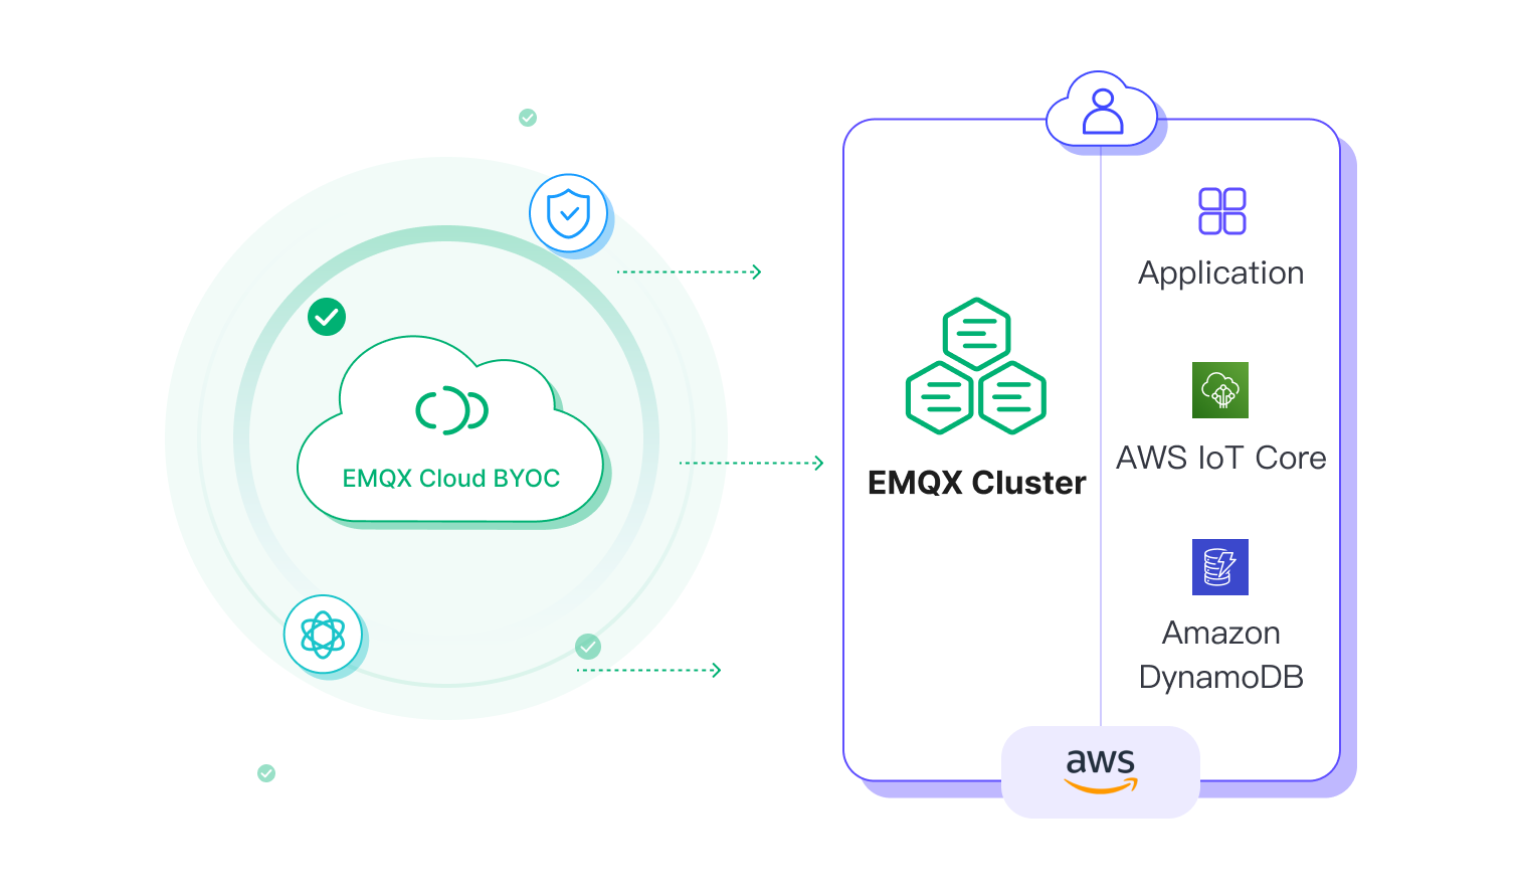 EMQX Cloud BYOC on AWS